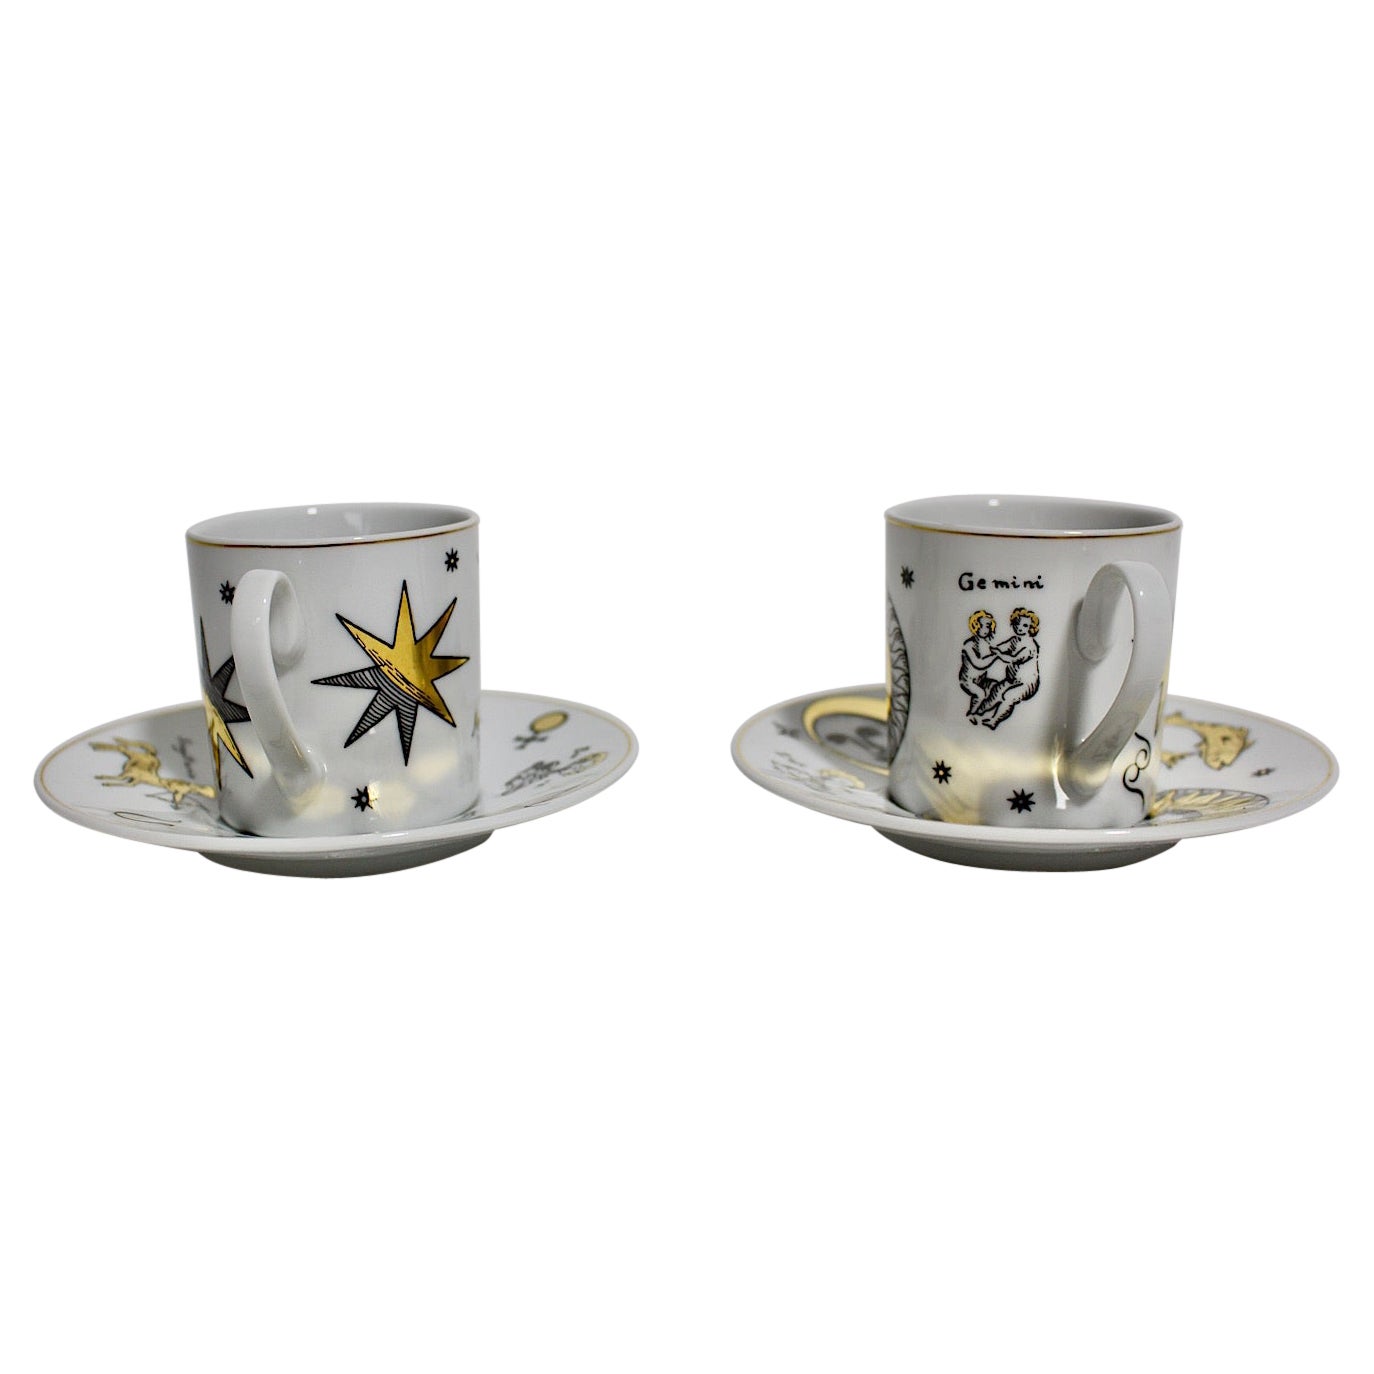 Ceramic Cup Coffee Mug Vintage Coffee Tea Cup Set of two Vintage Espresso Cup made by Jugokeramika Yugoslavia Socialist Porcelain